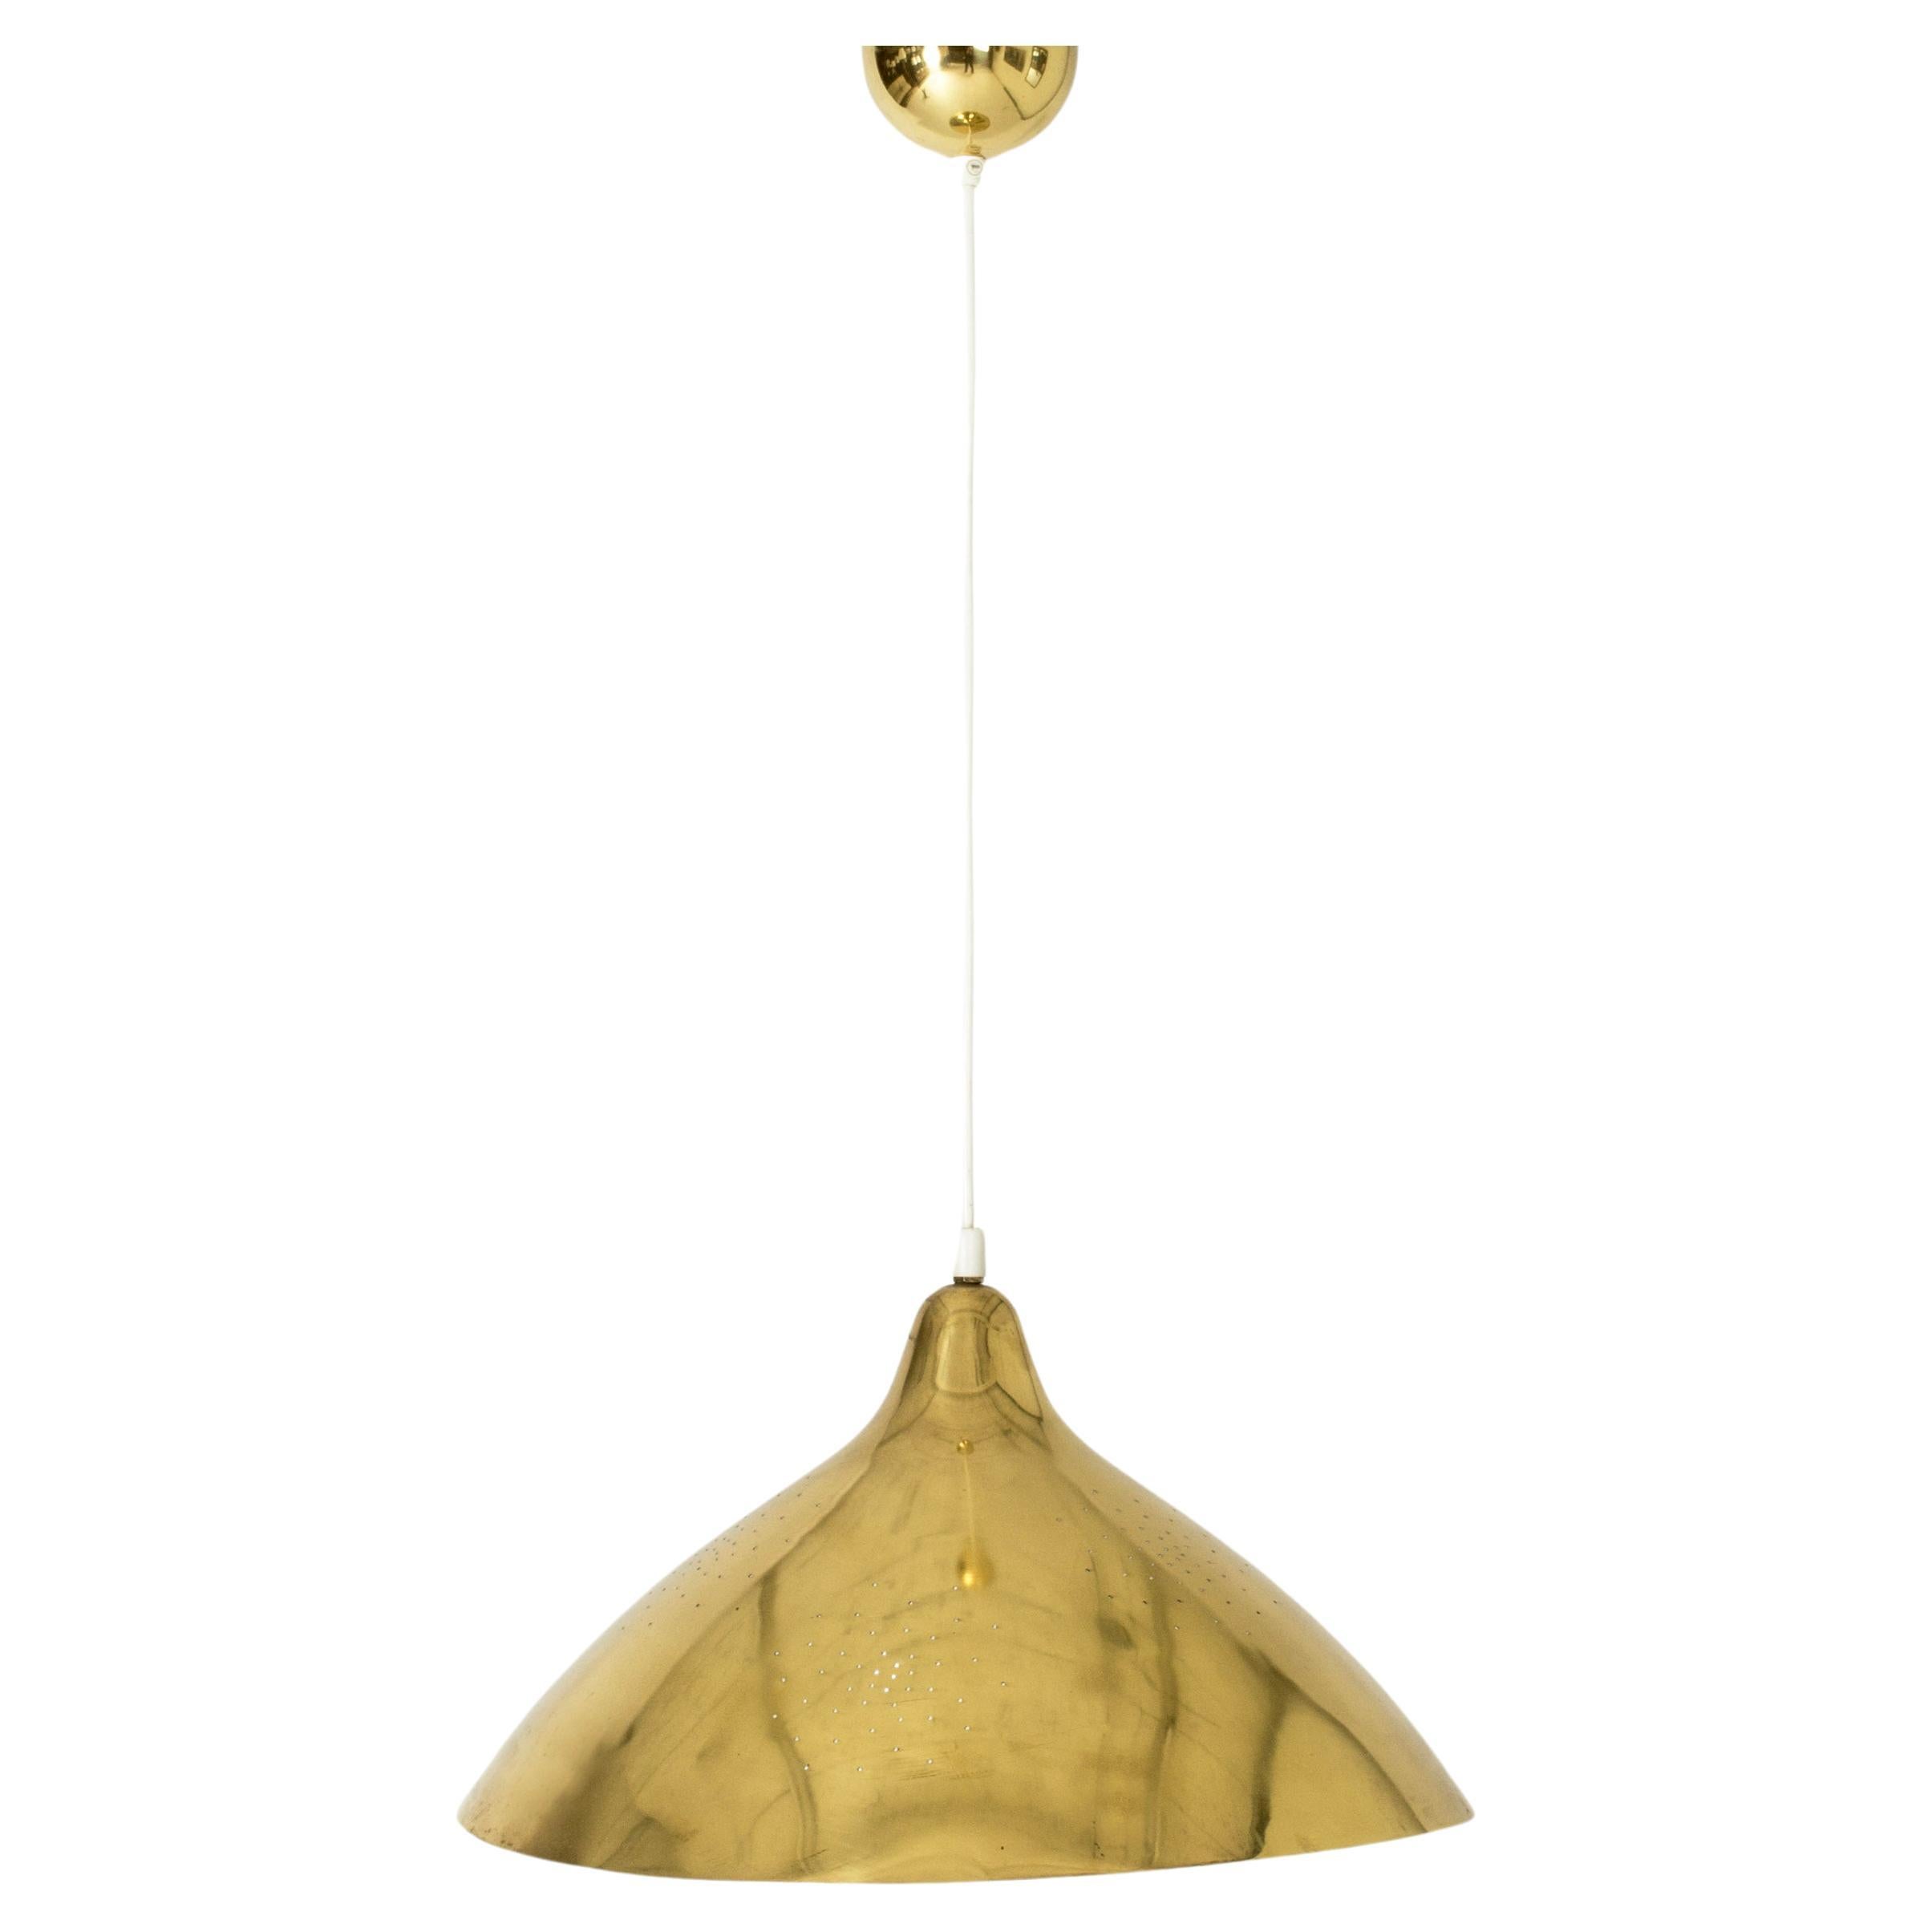 Midcentury Brass Pendant Lamp by Lisa Johansson-Pape, Orno, Finland, 1950s